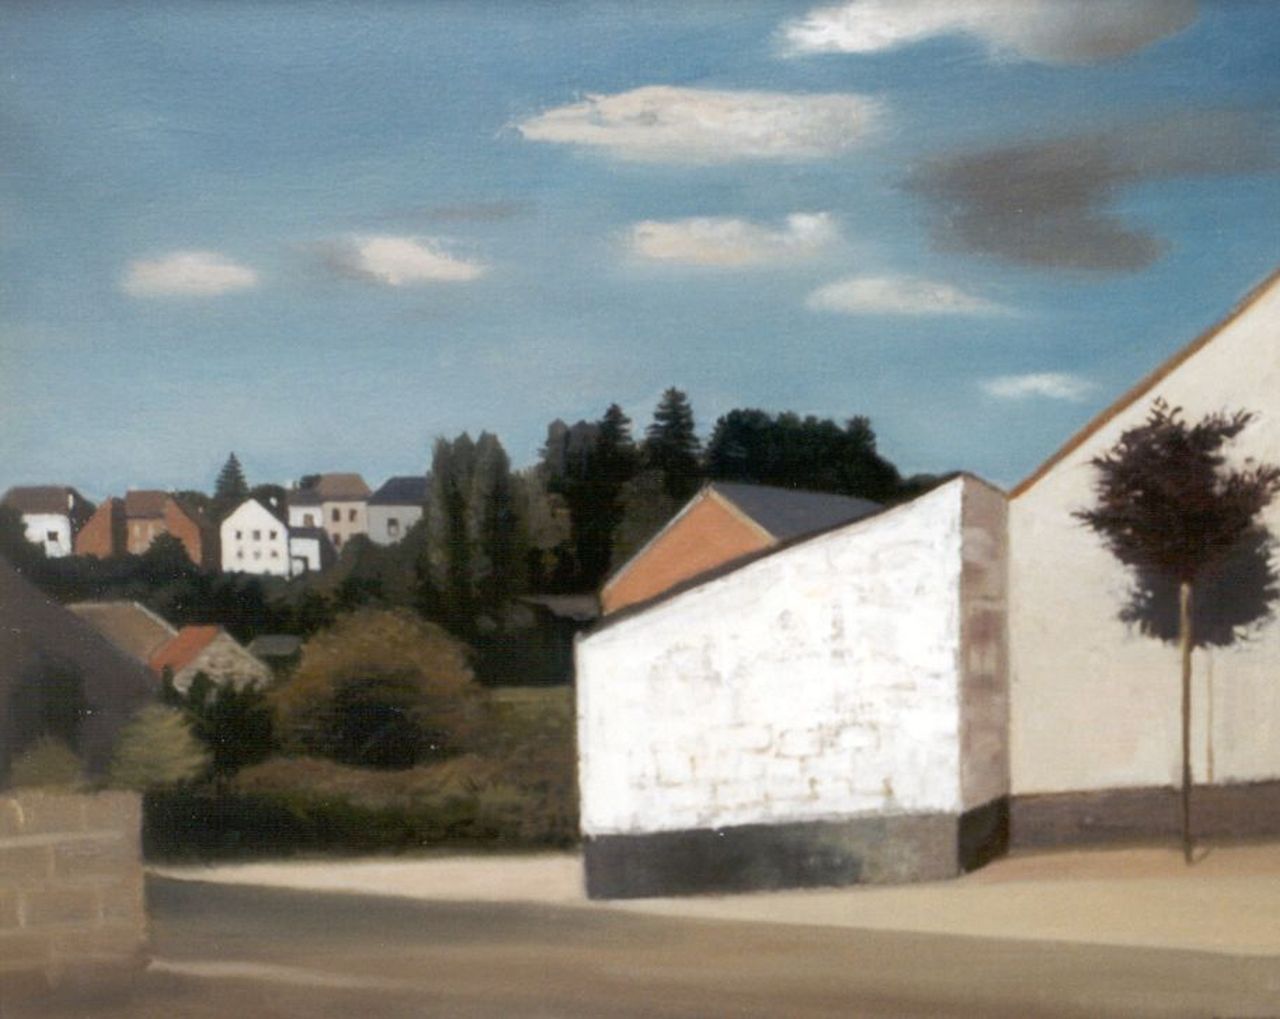 Hynckes R.  | Raoul Hynckes, Belgisch dorpsgezicht, olieverf op doek 52,3 x 65,1 cm, gesigneerd rechtsonder